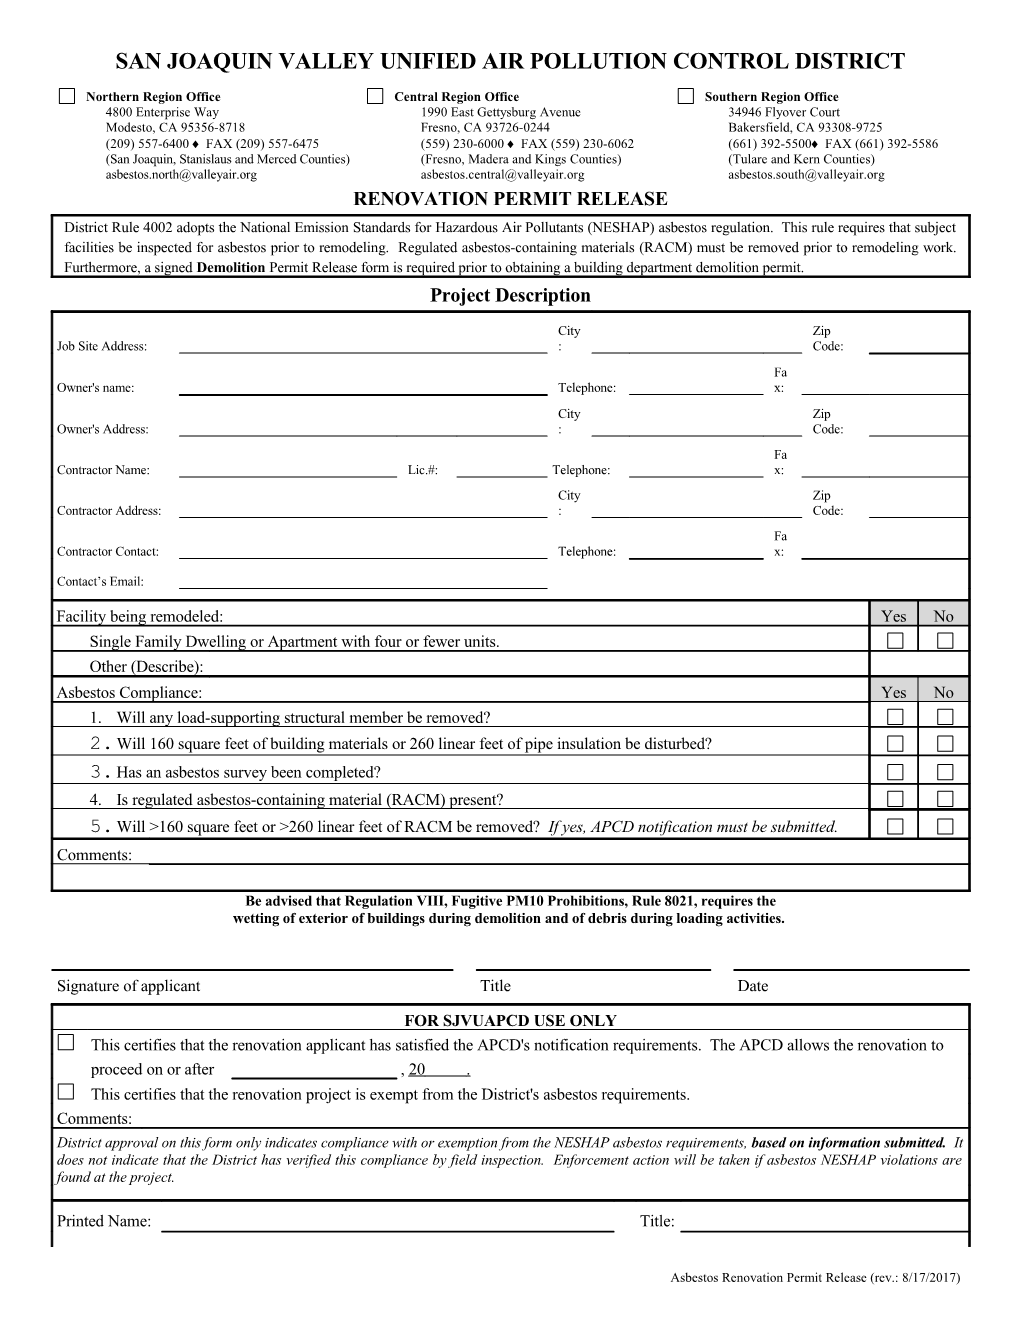 Renovation Permit Release Form